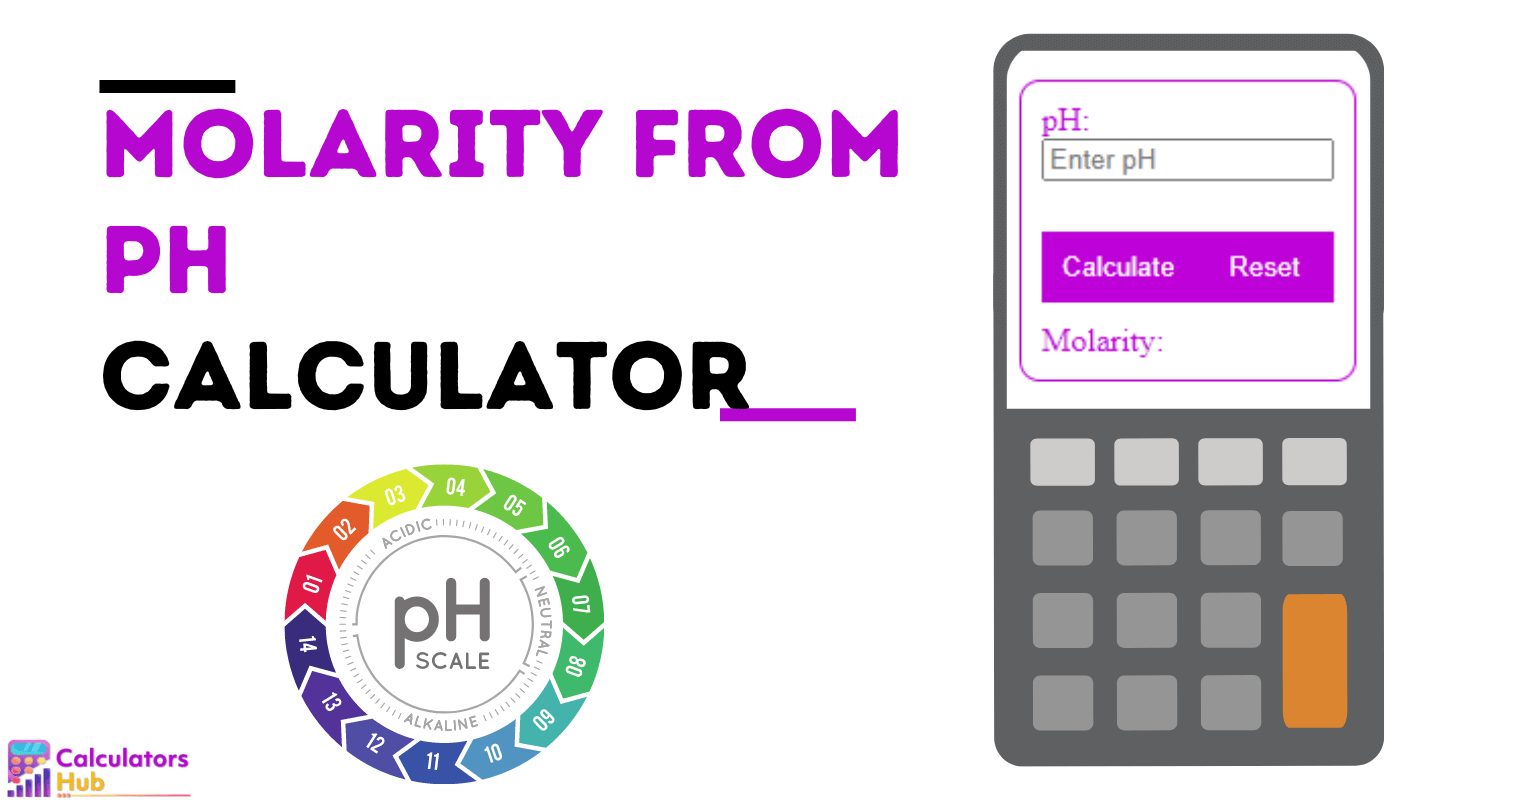 Molarity from pH Calculator